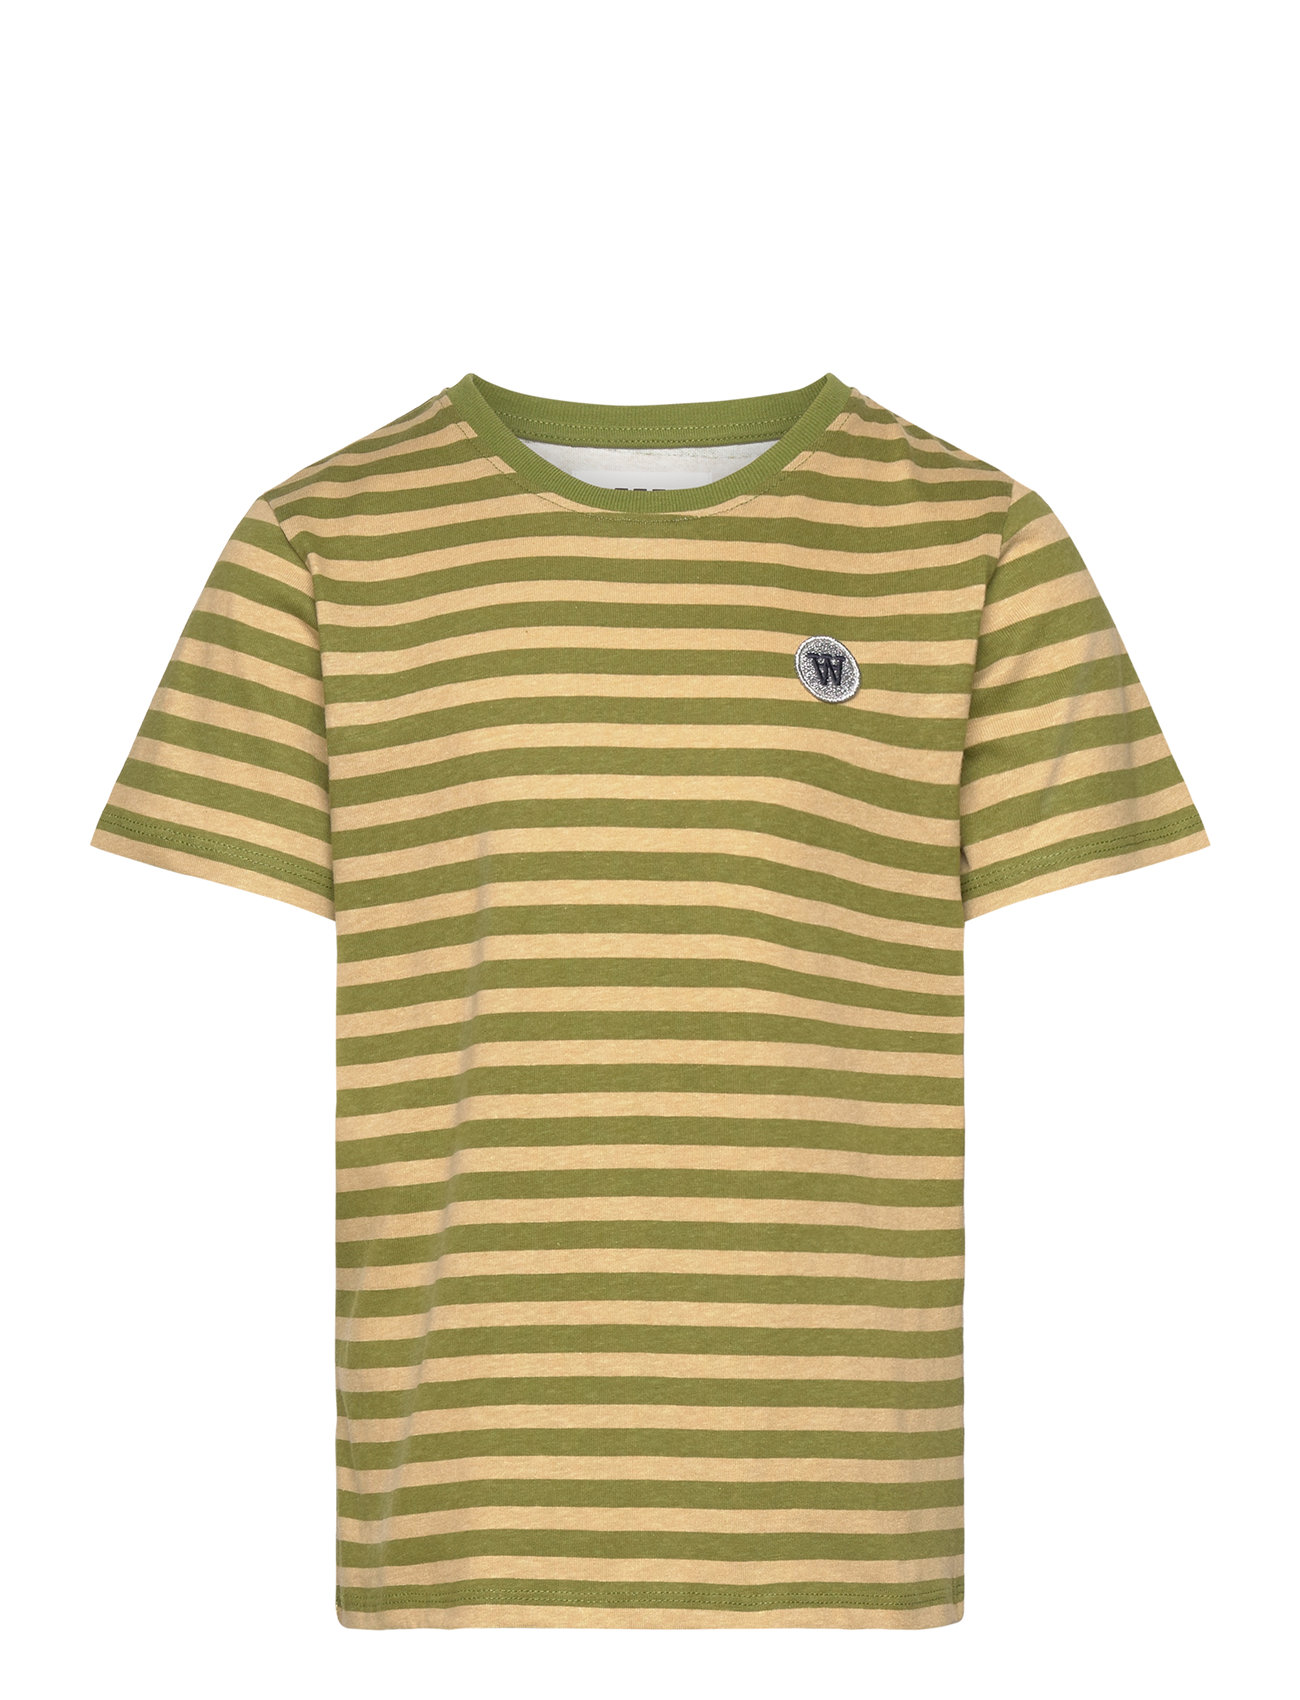 Ola Chrome Badge T-Shirt Gots Tops T-Kortærmet Skjorte Multi/patterned Double A By Wood Wood